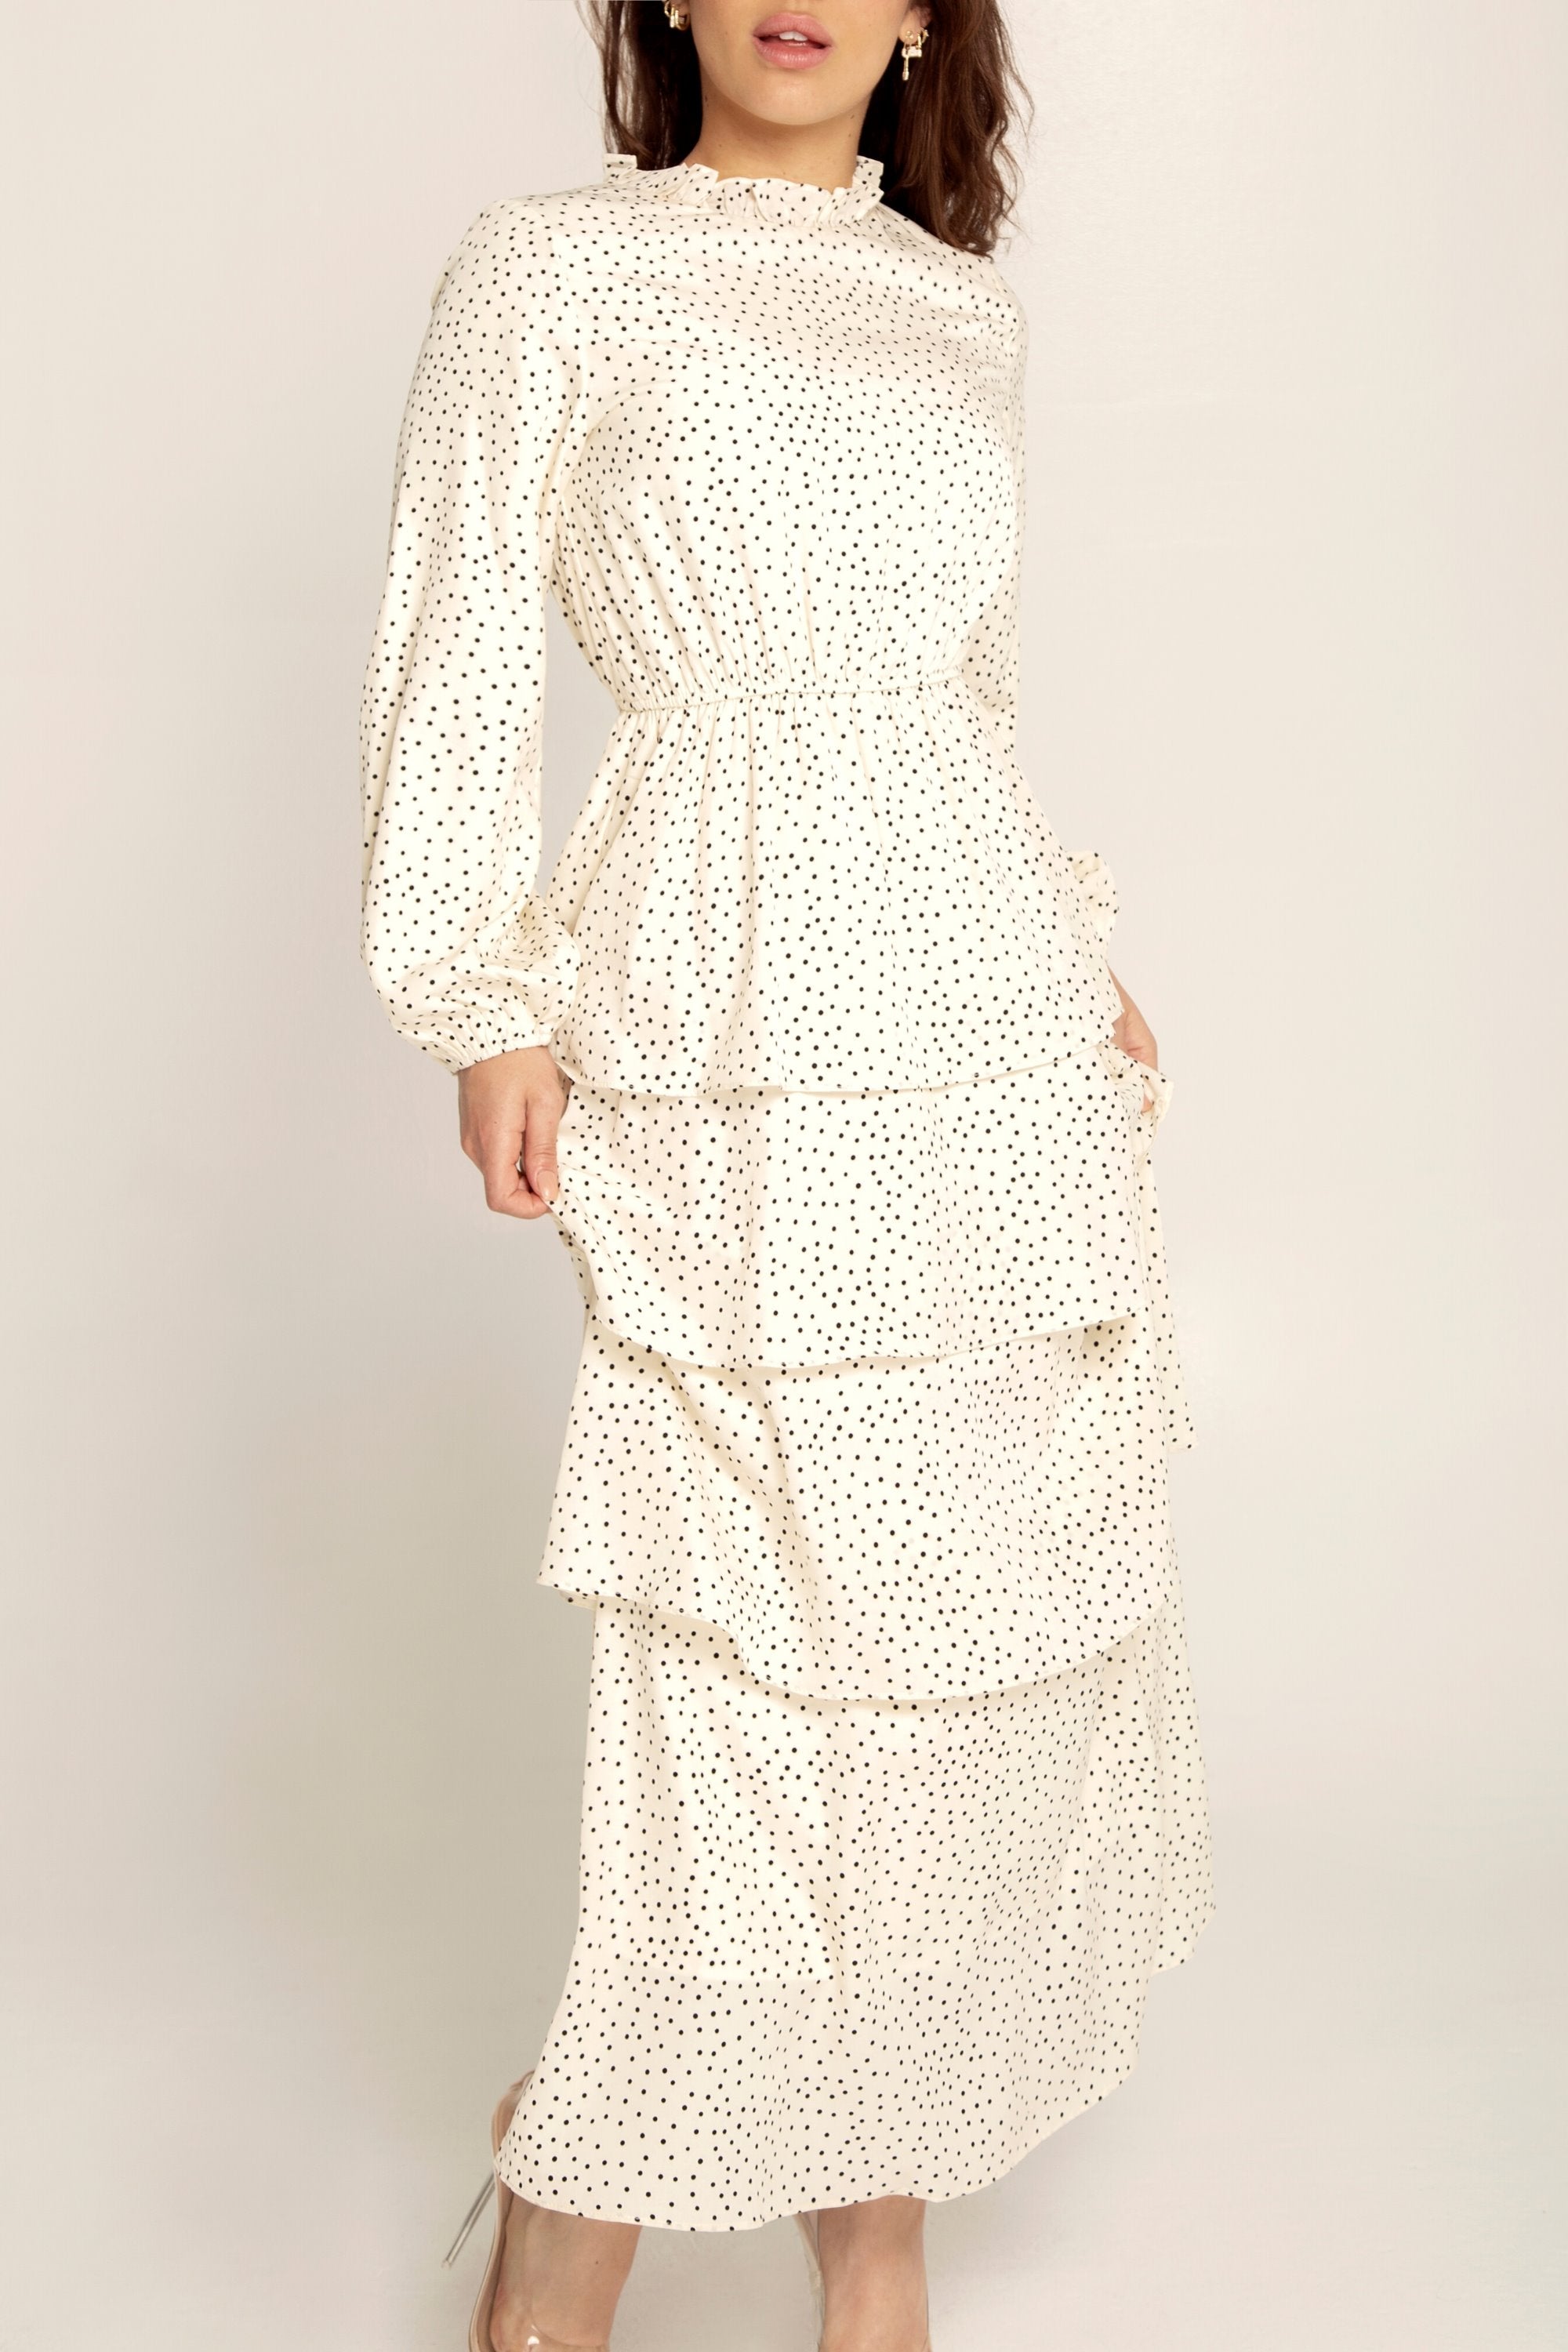 Pleated midaxi dress in polka dot print with ruffled neck, ecru